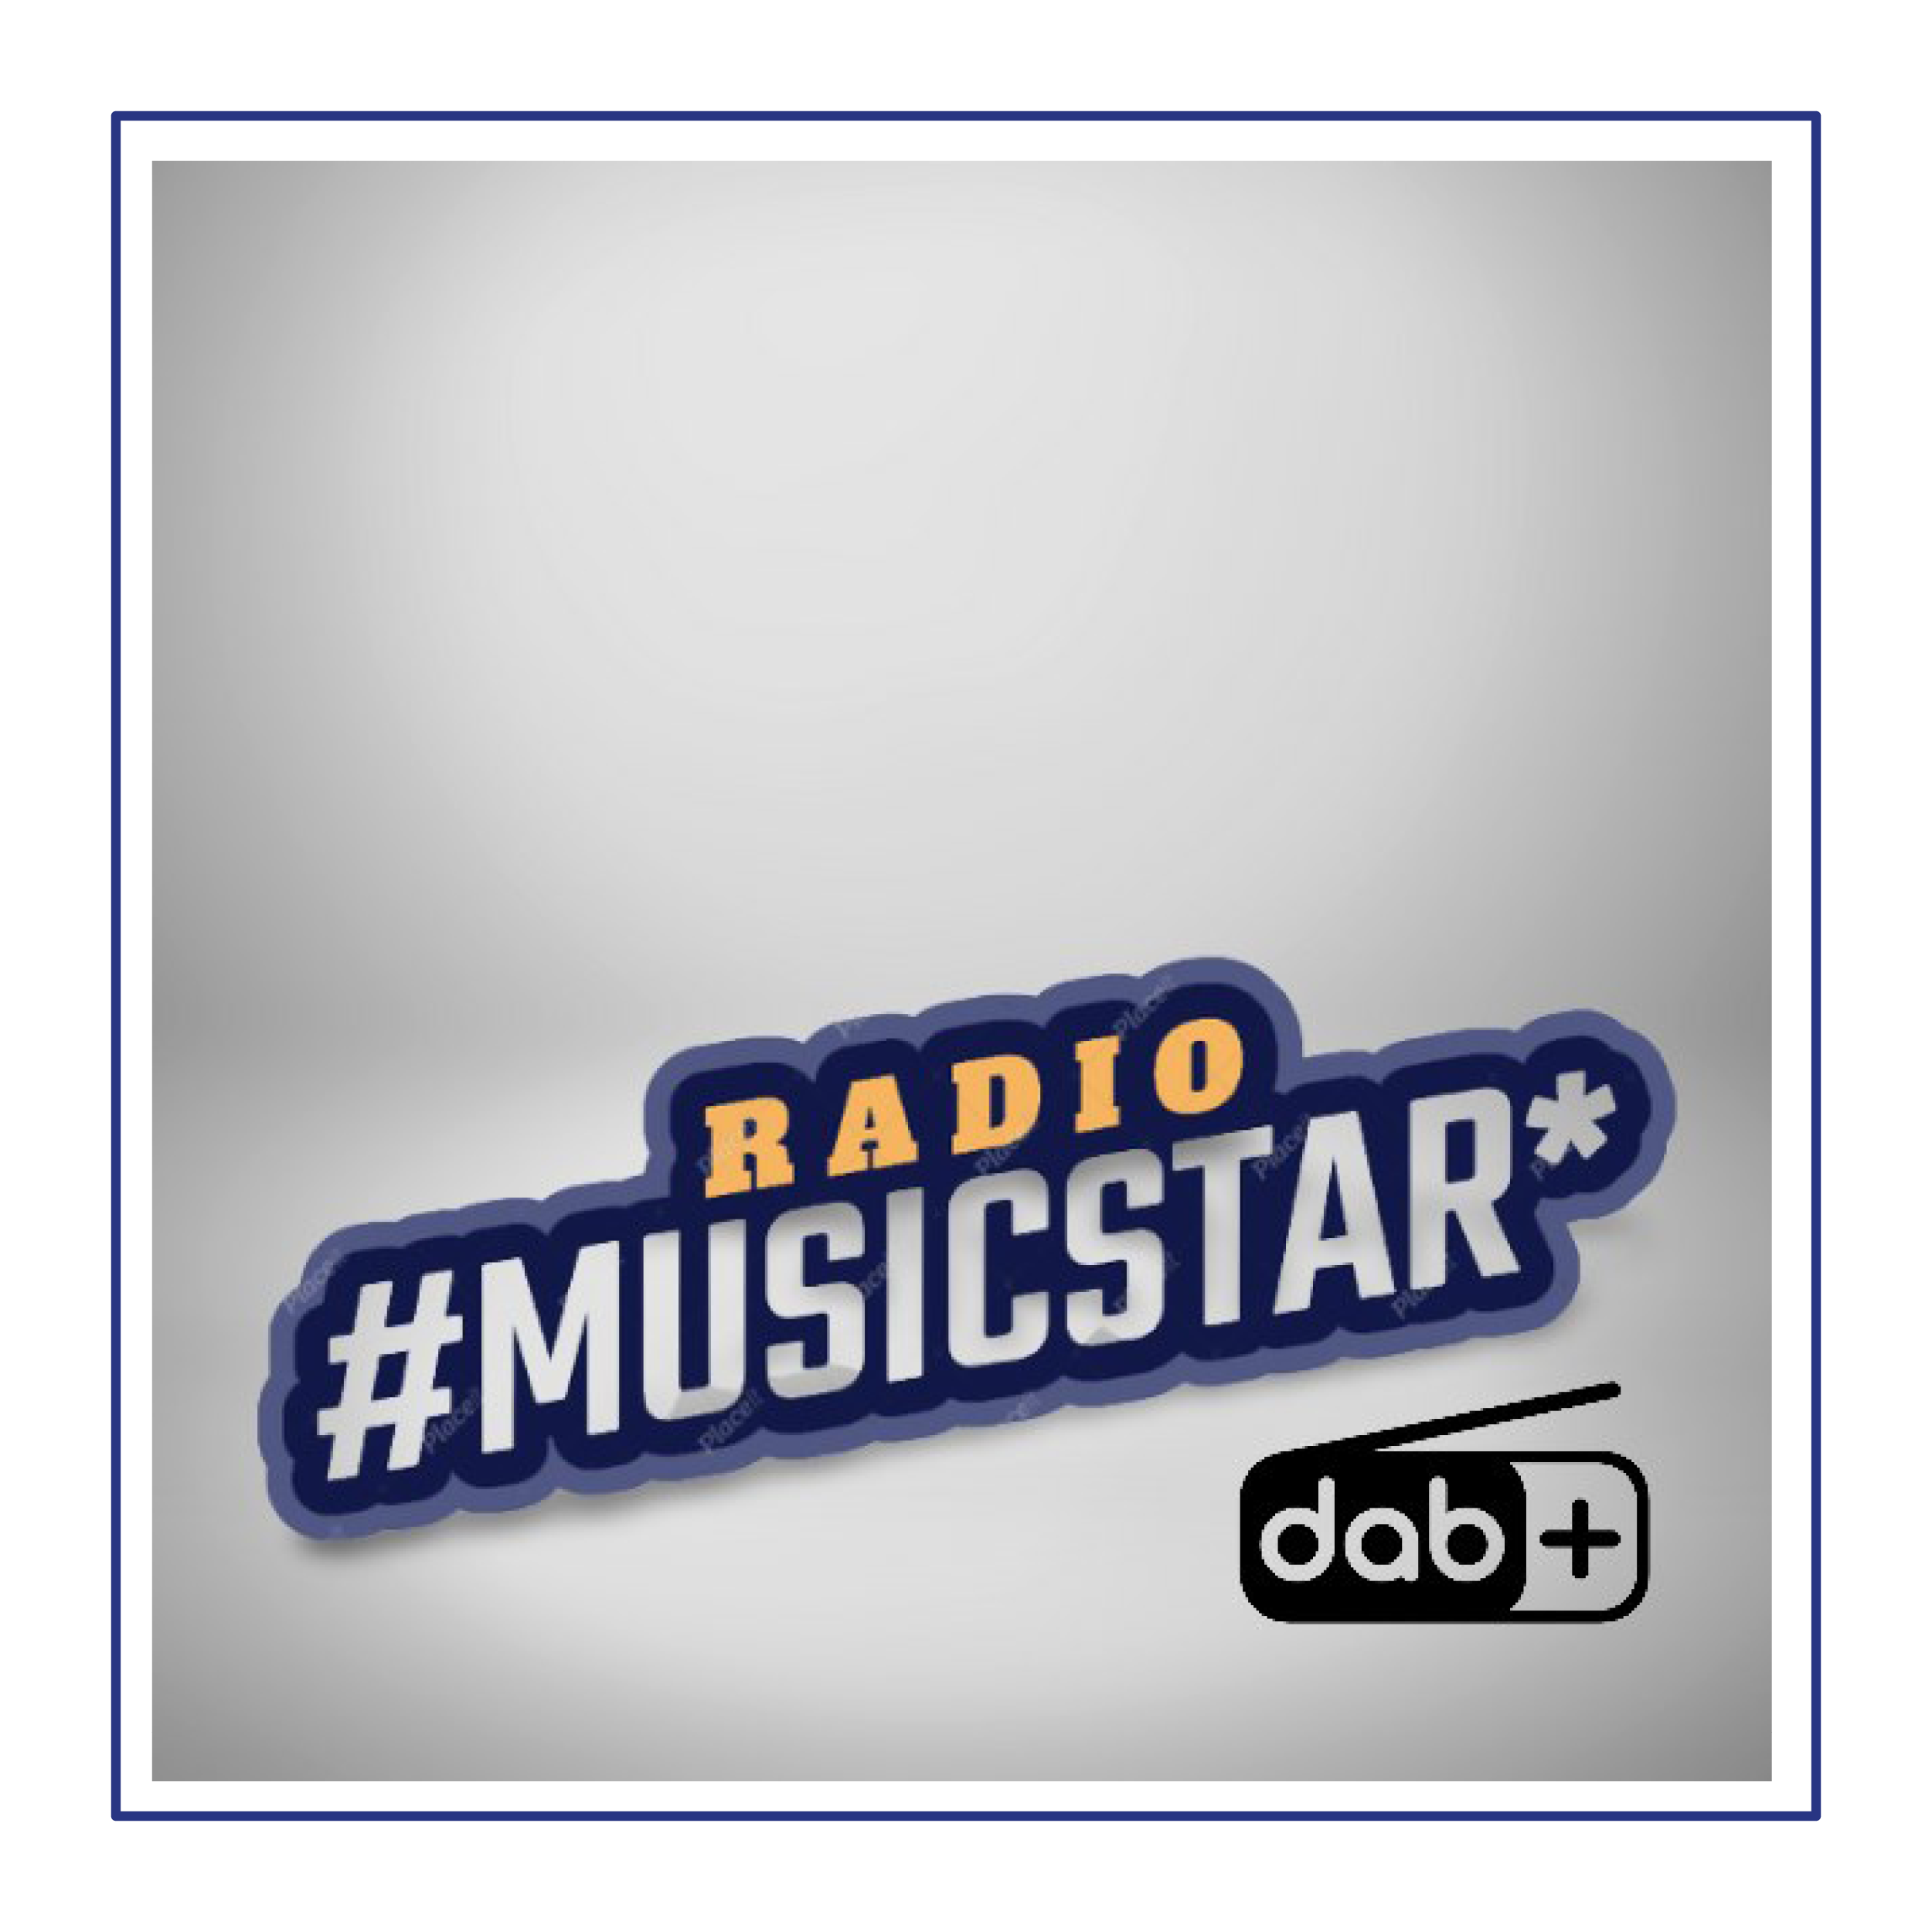 Radio MusicStar